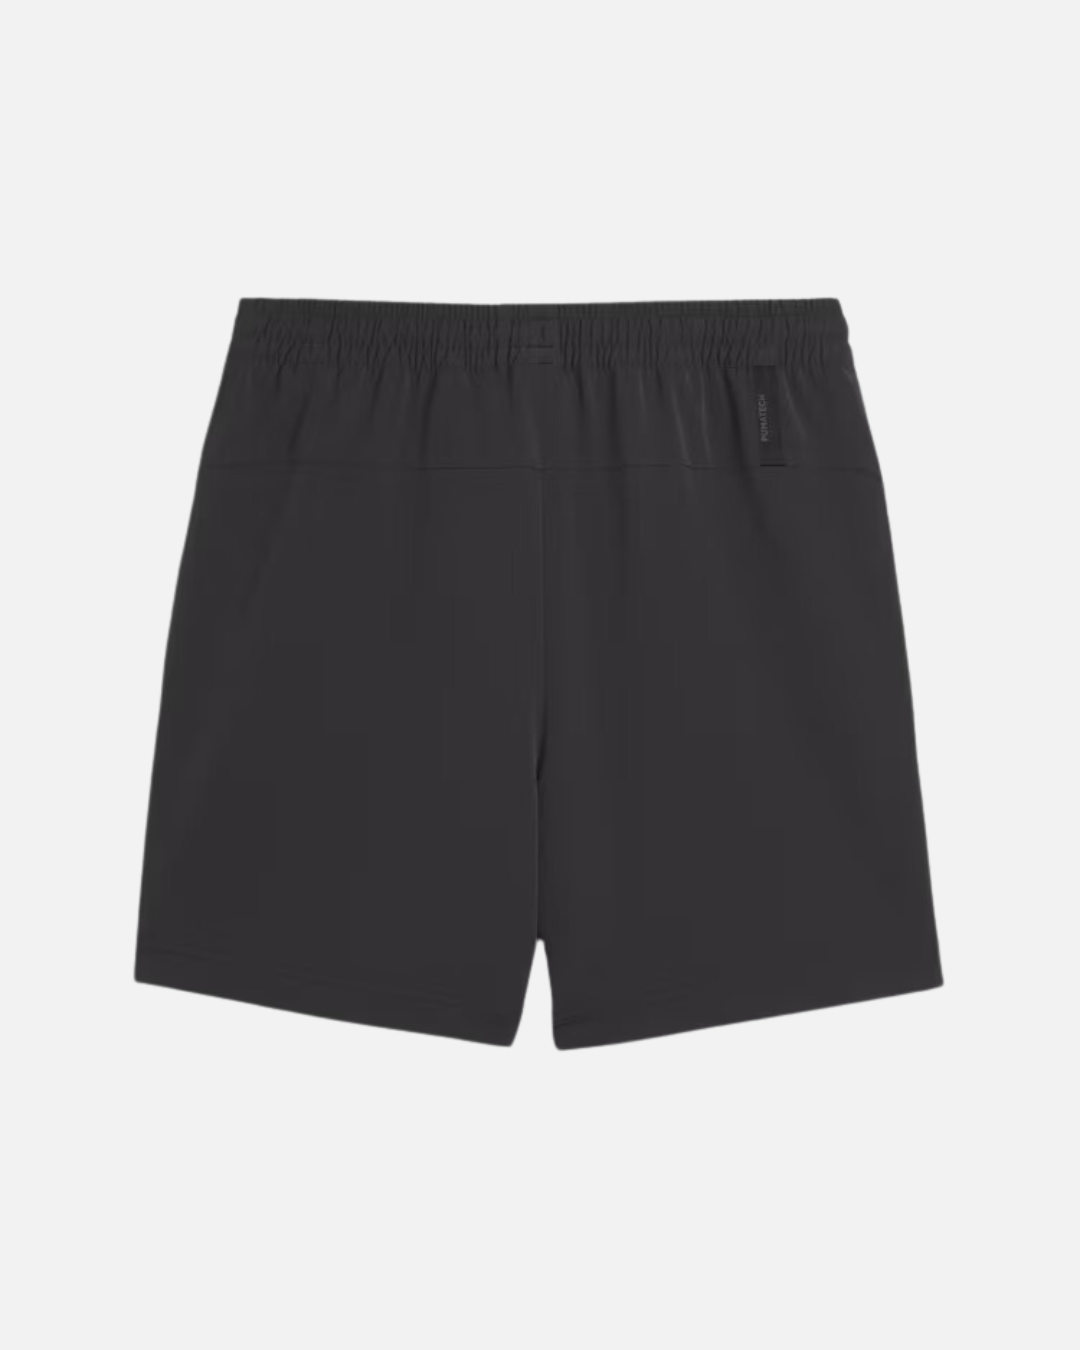 Puma Tech Shorts - Black